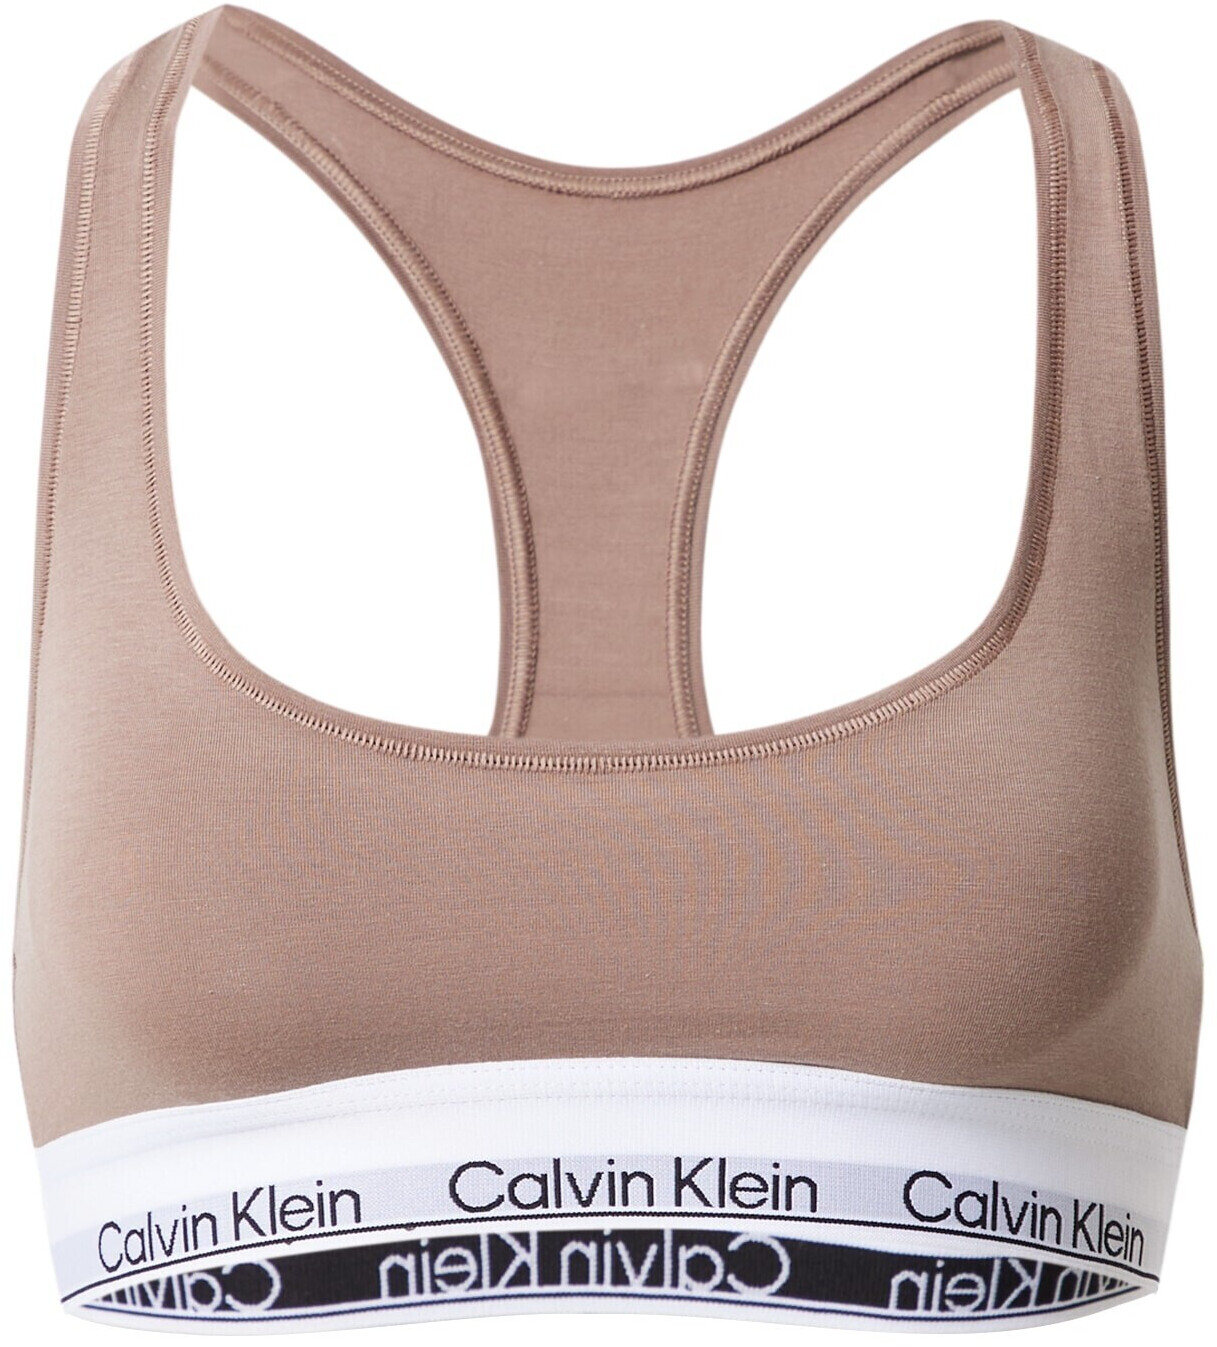 Buy Calvin Klein Bra Unlined beige from £16.99 (Today) – Best